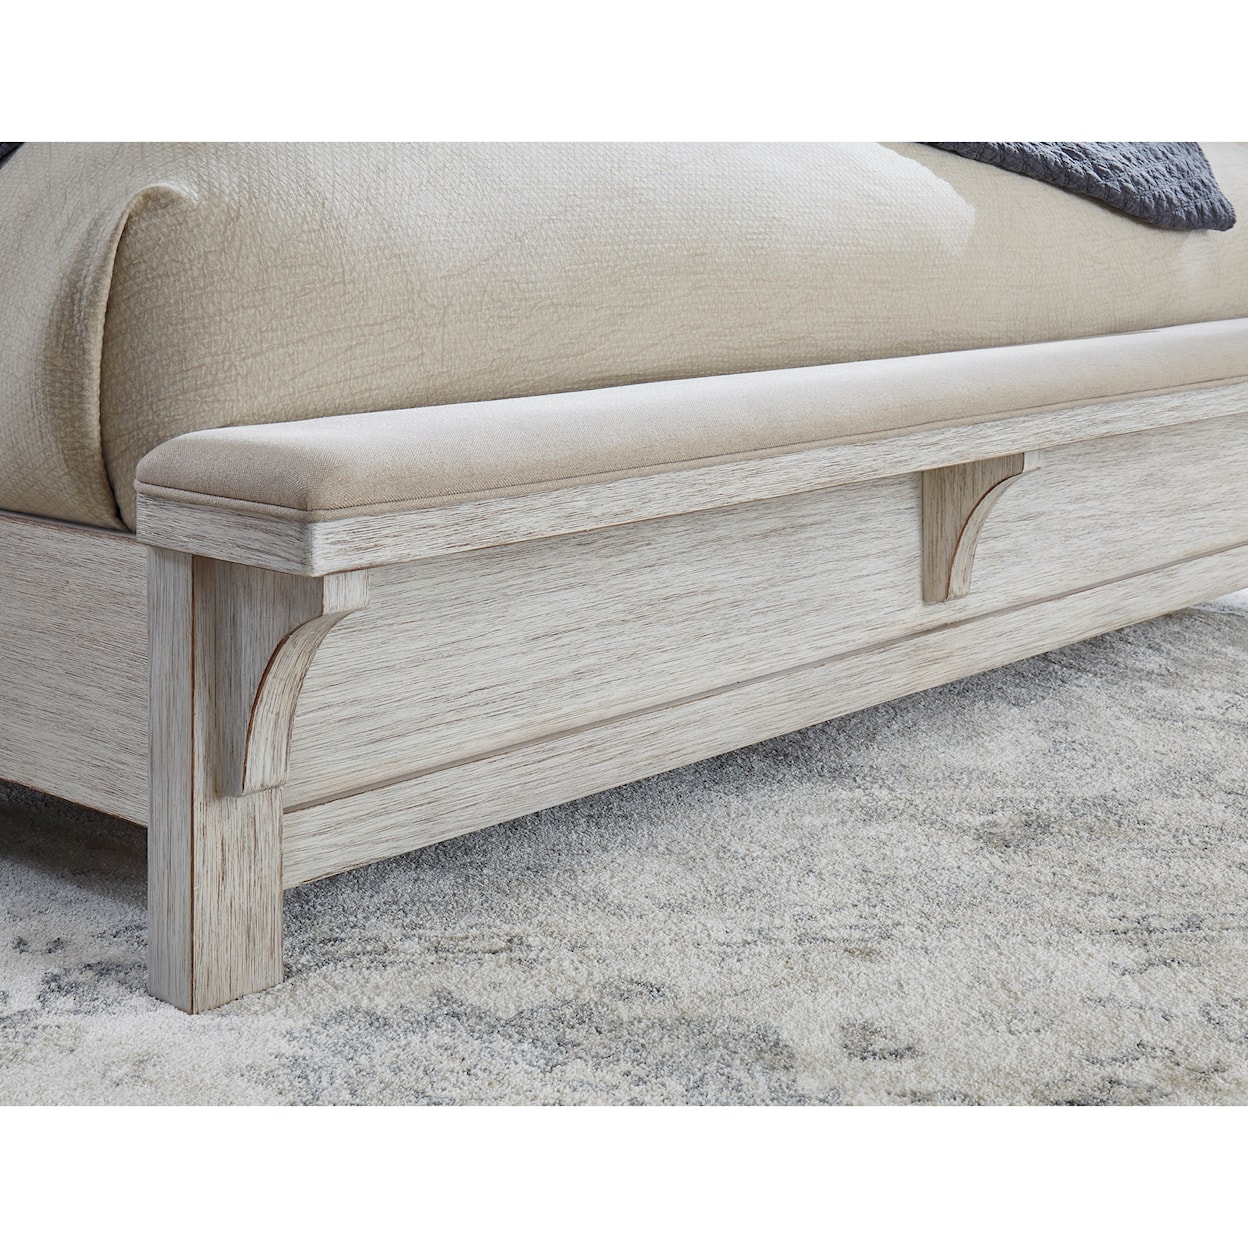 Ashley Signature Design Brashland King Bed with Footboard Bench